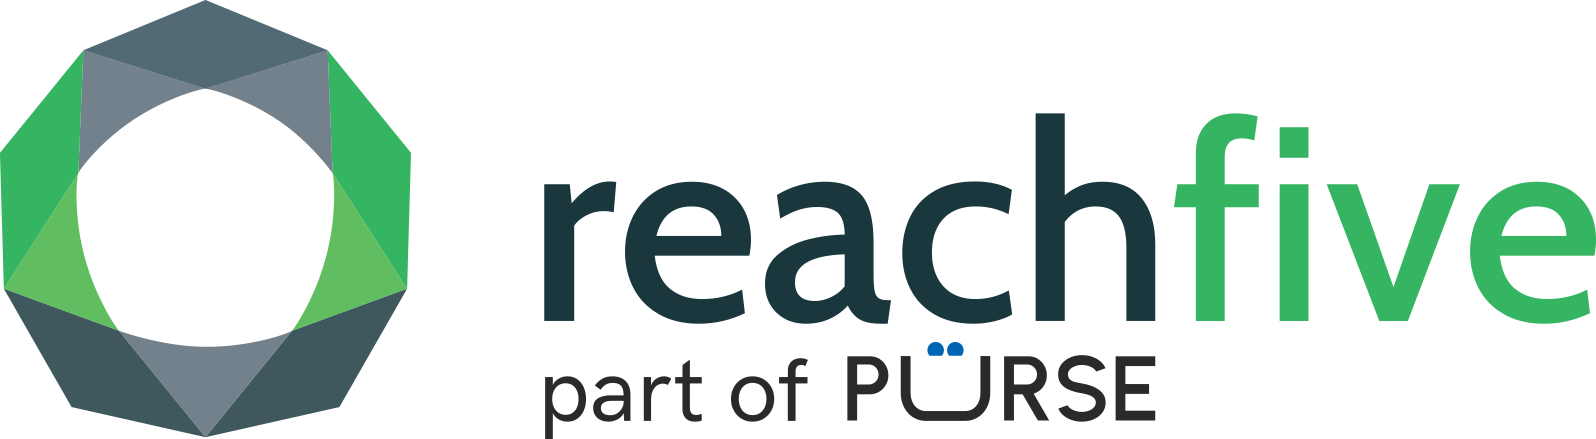 logo_reachfive_purse